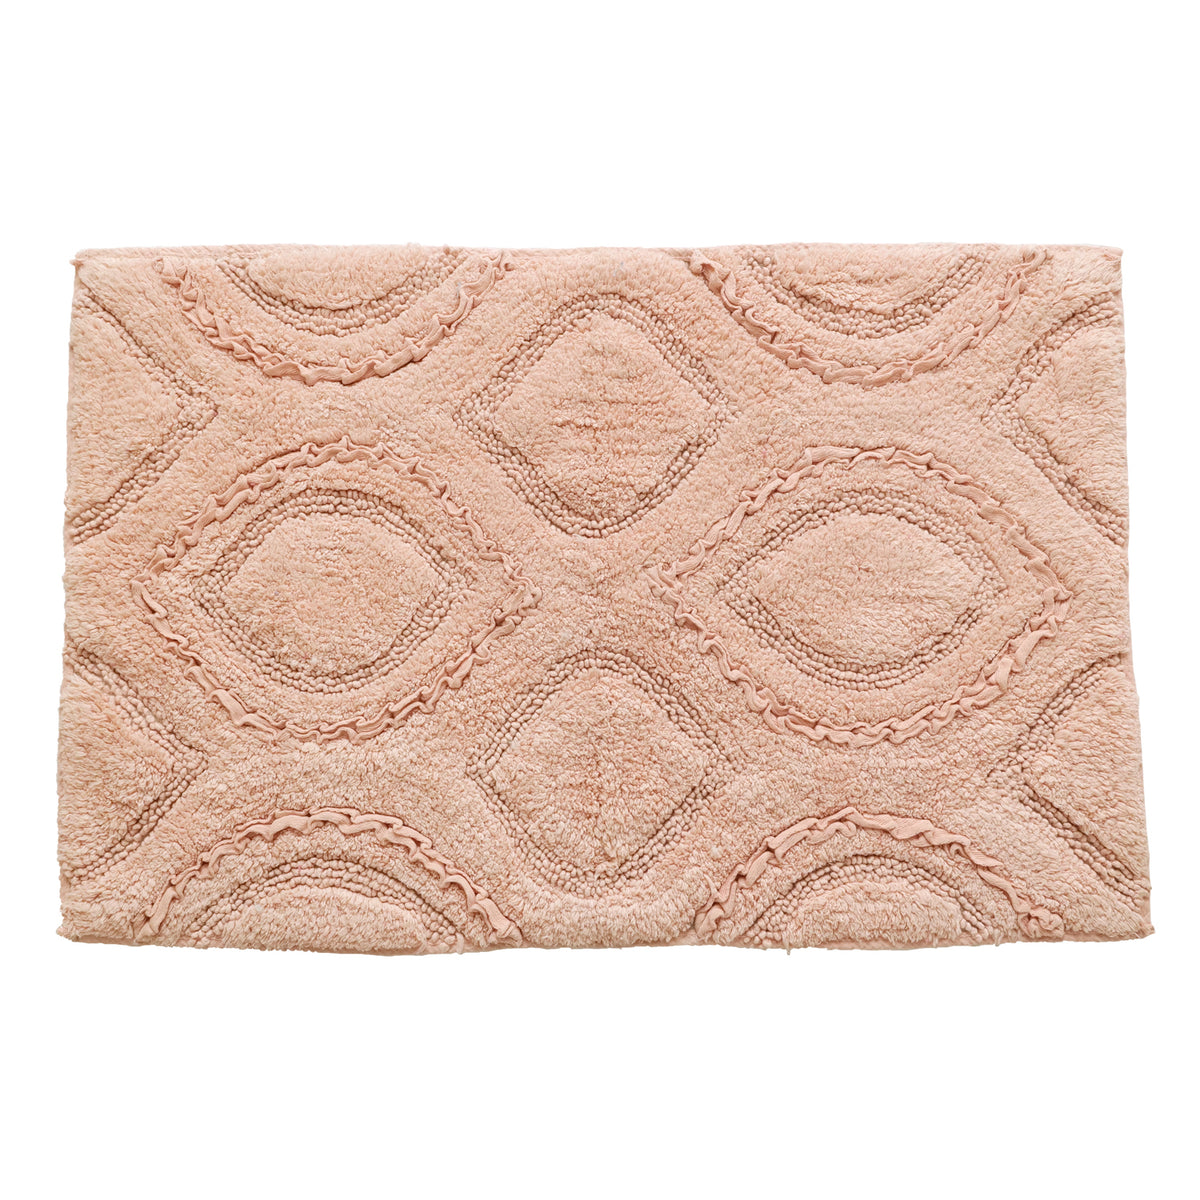 Peach colour Woven Cotton Quickdry Anti-Slip Bath Mat 